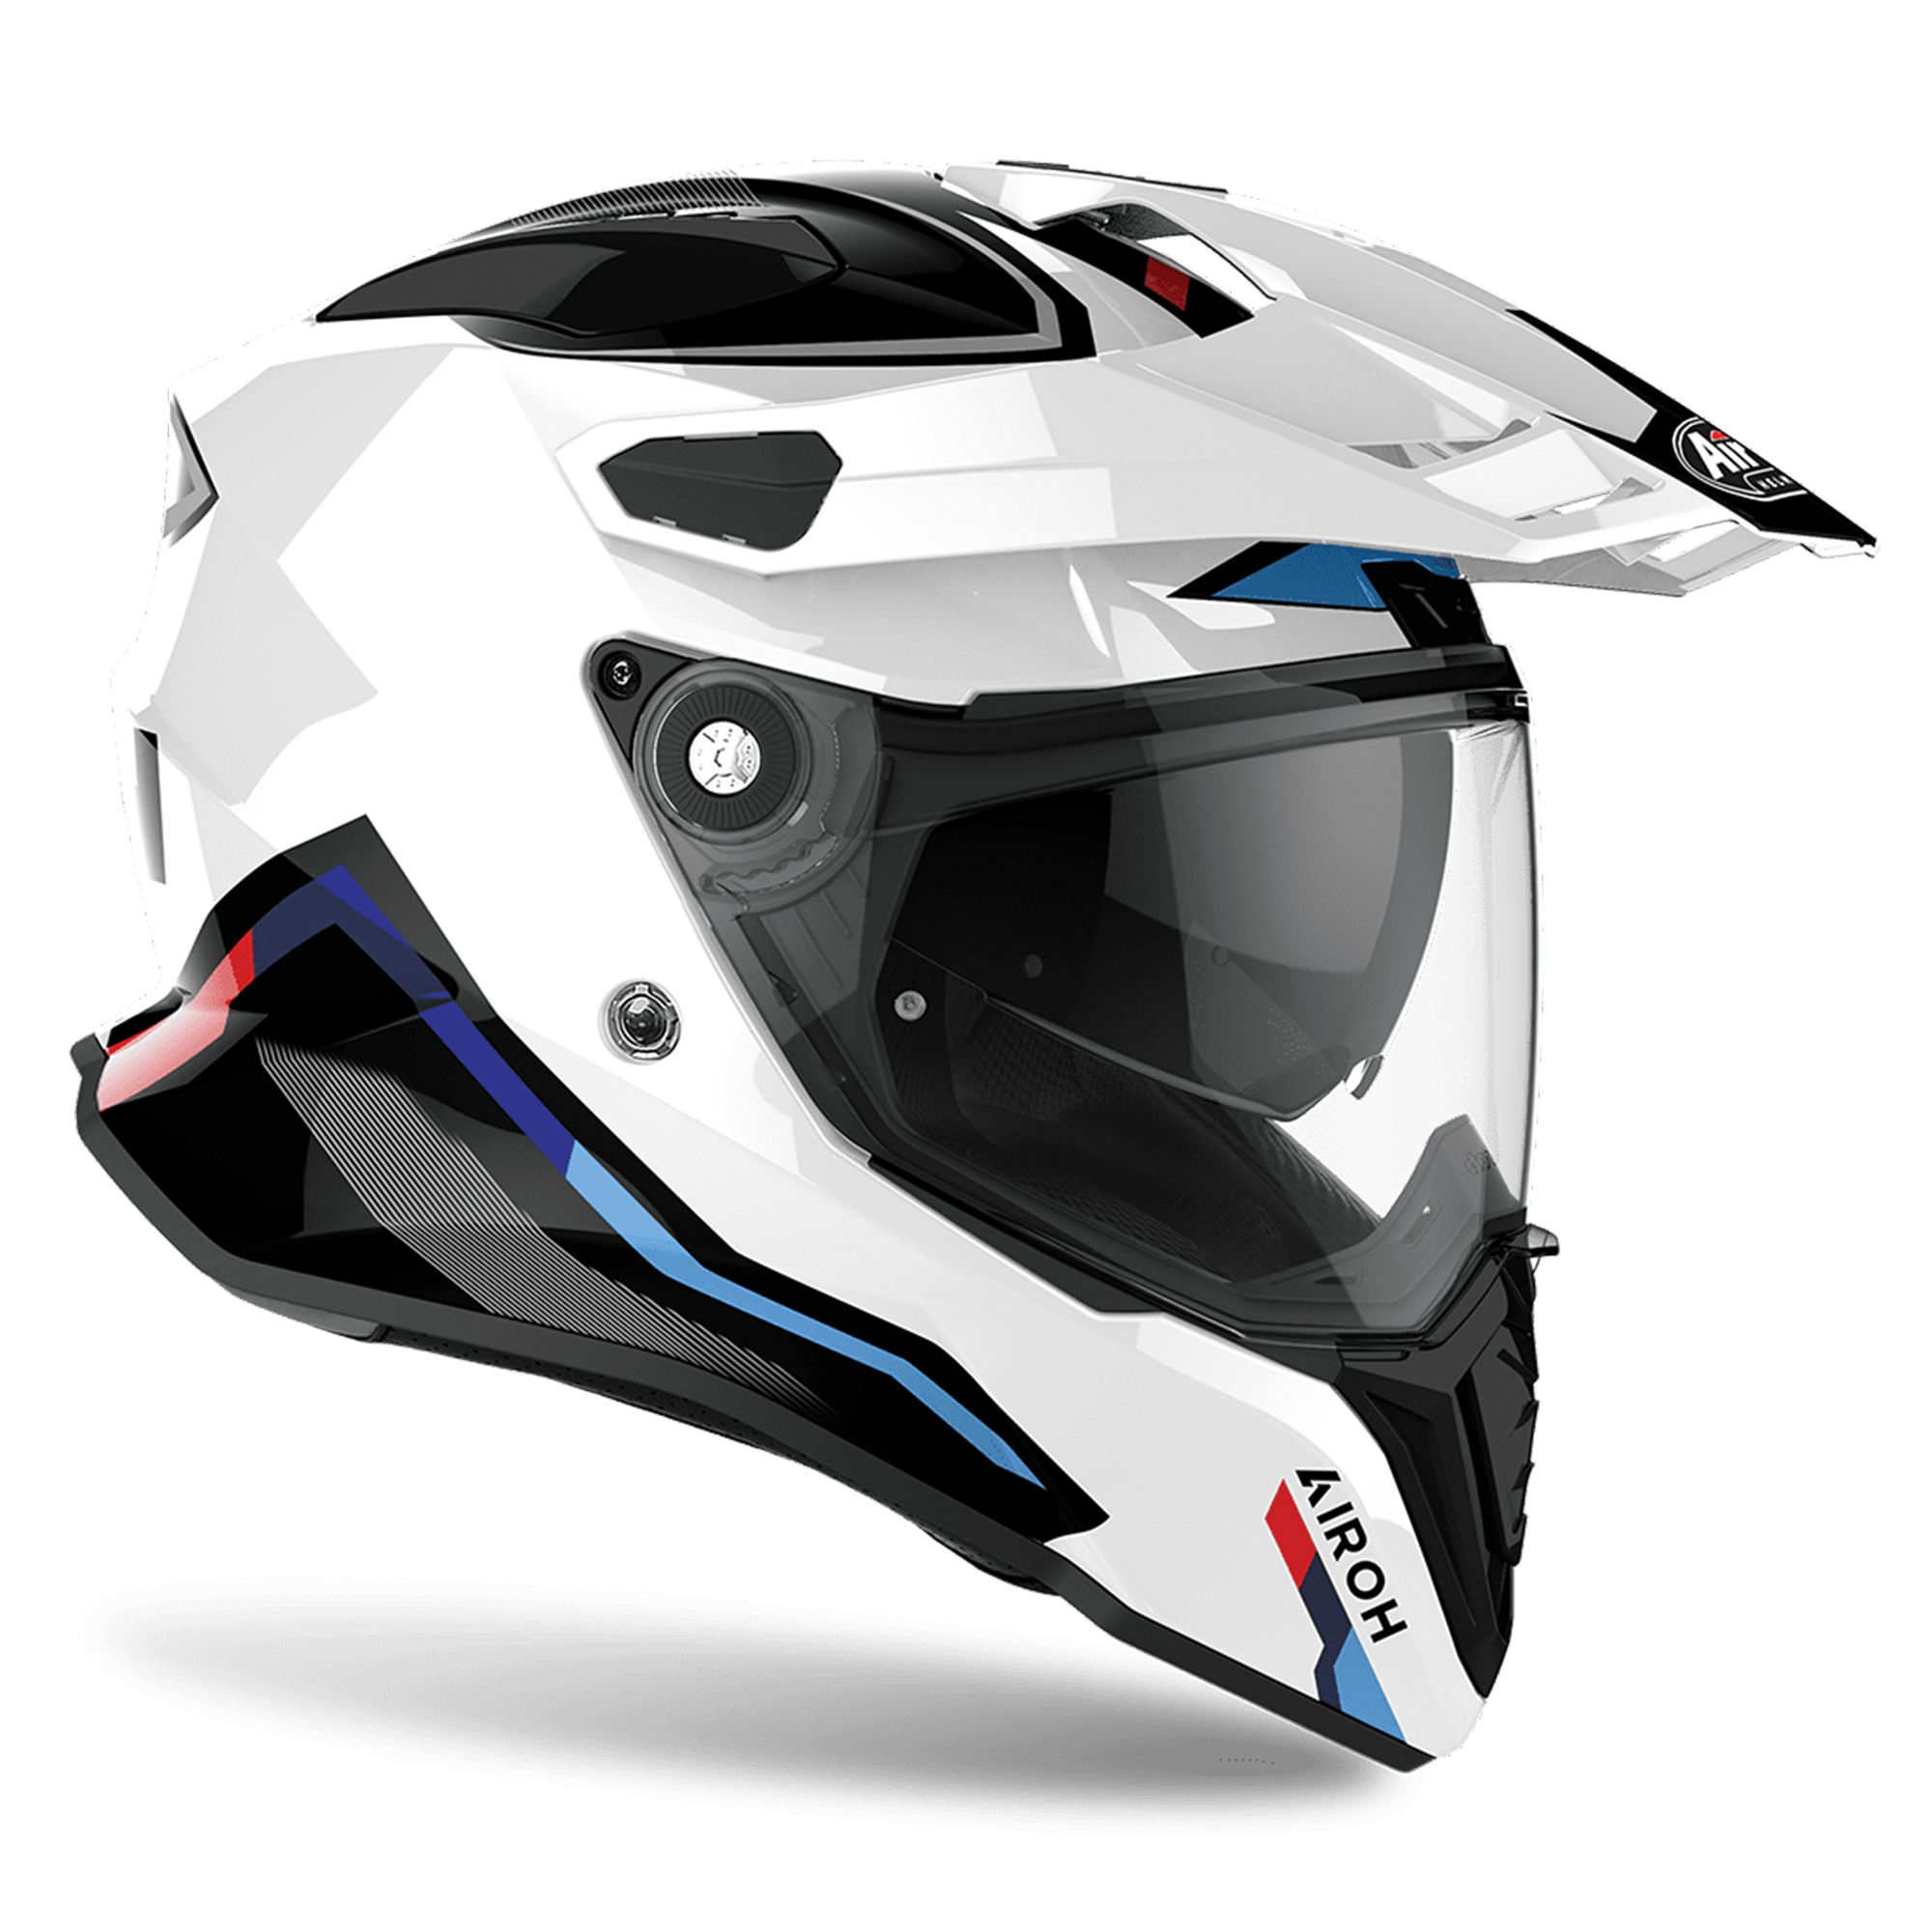 AIROH Commander 'Factor' Adventure Motorcycle Helmet - White Gloss